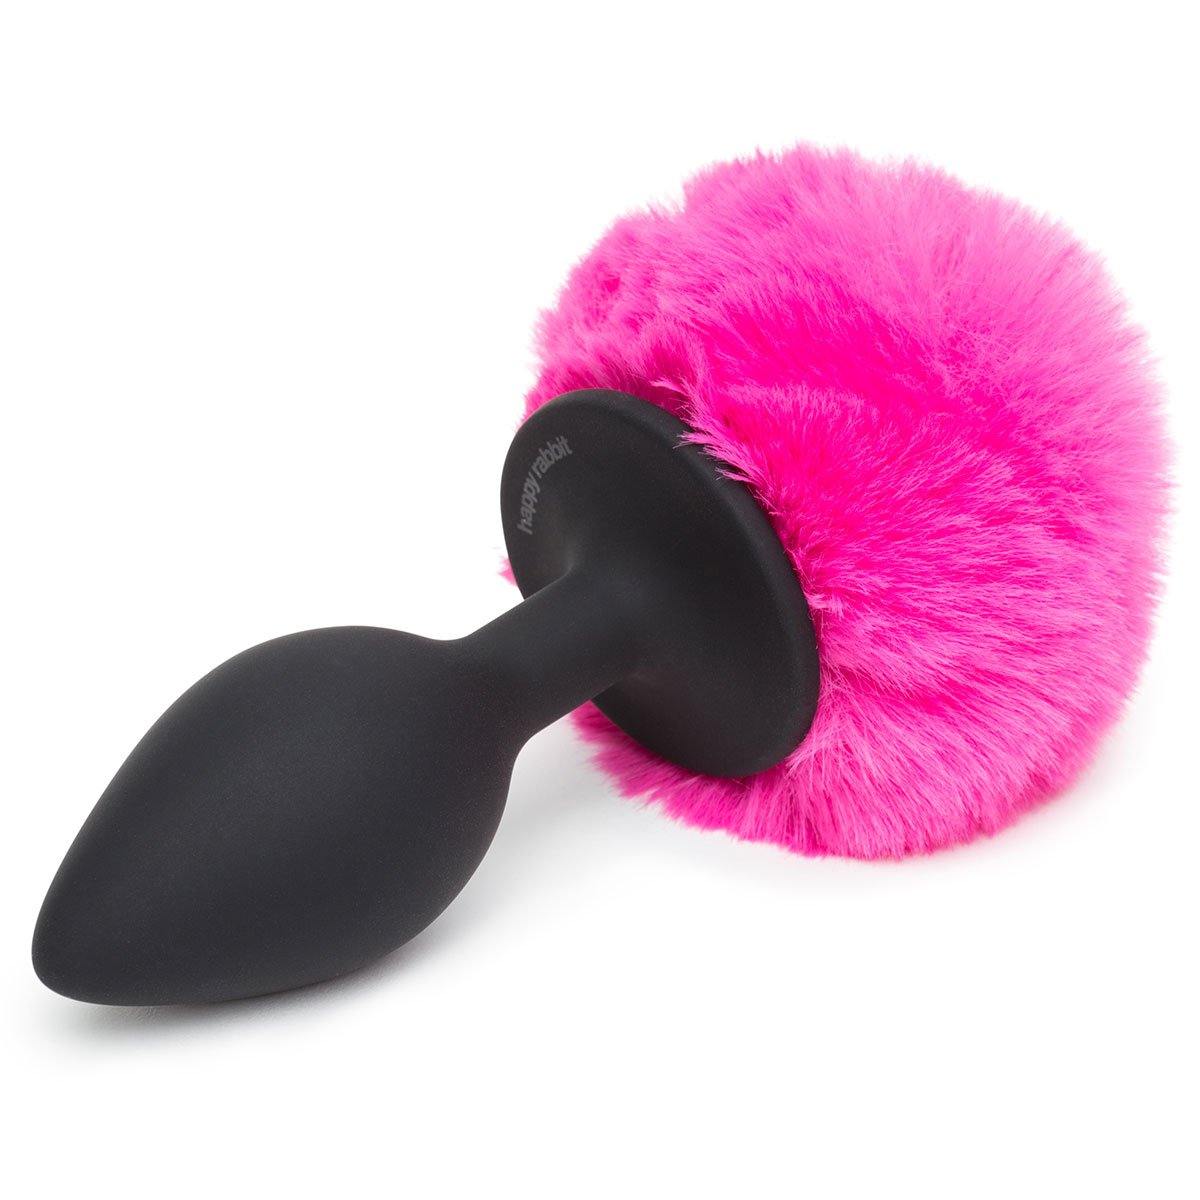 Happy Rabbit Butt Plug Black-Pink Tail Medium - Buy At Luxury Toy X - Free 3-Day Shipping